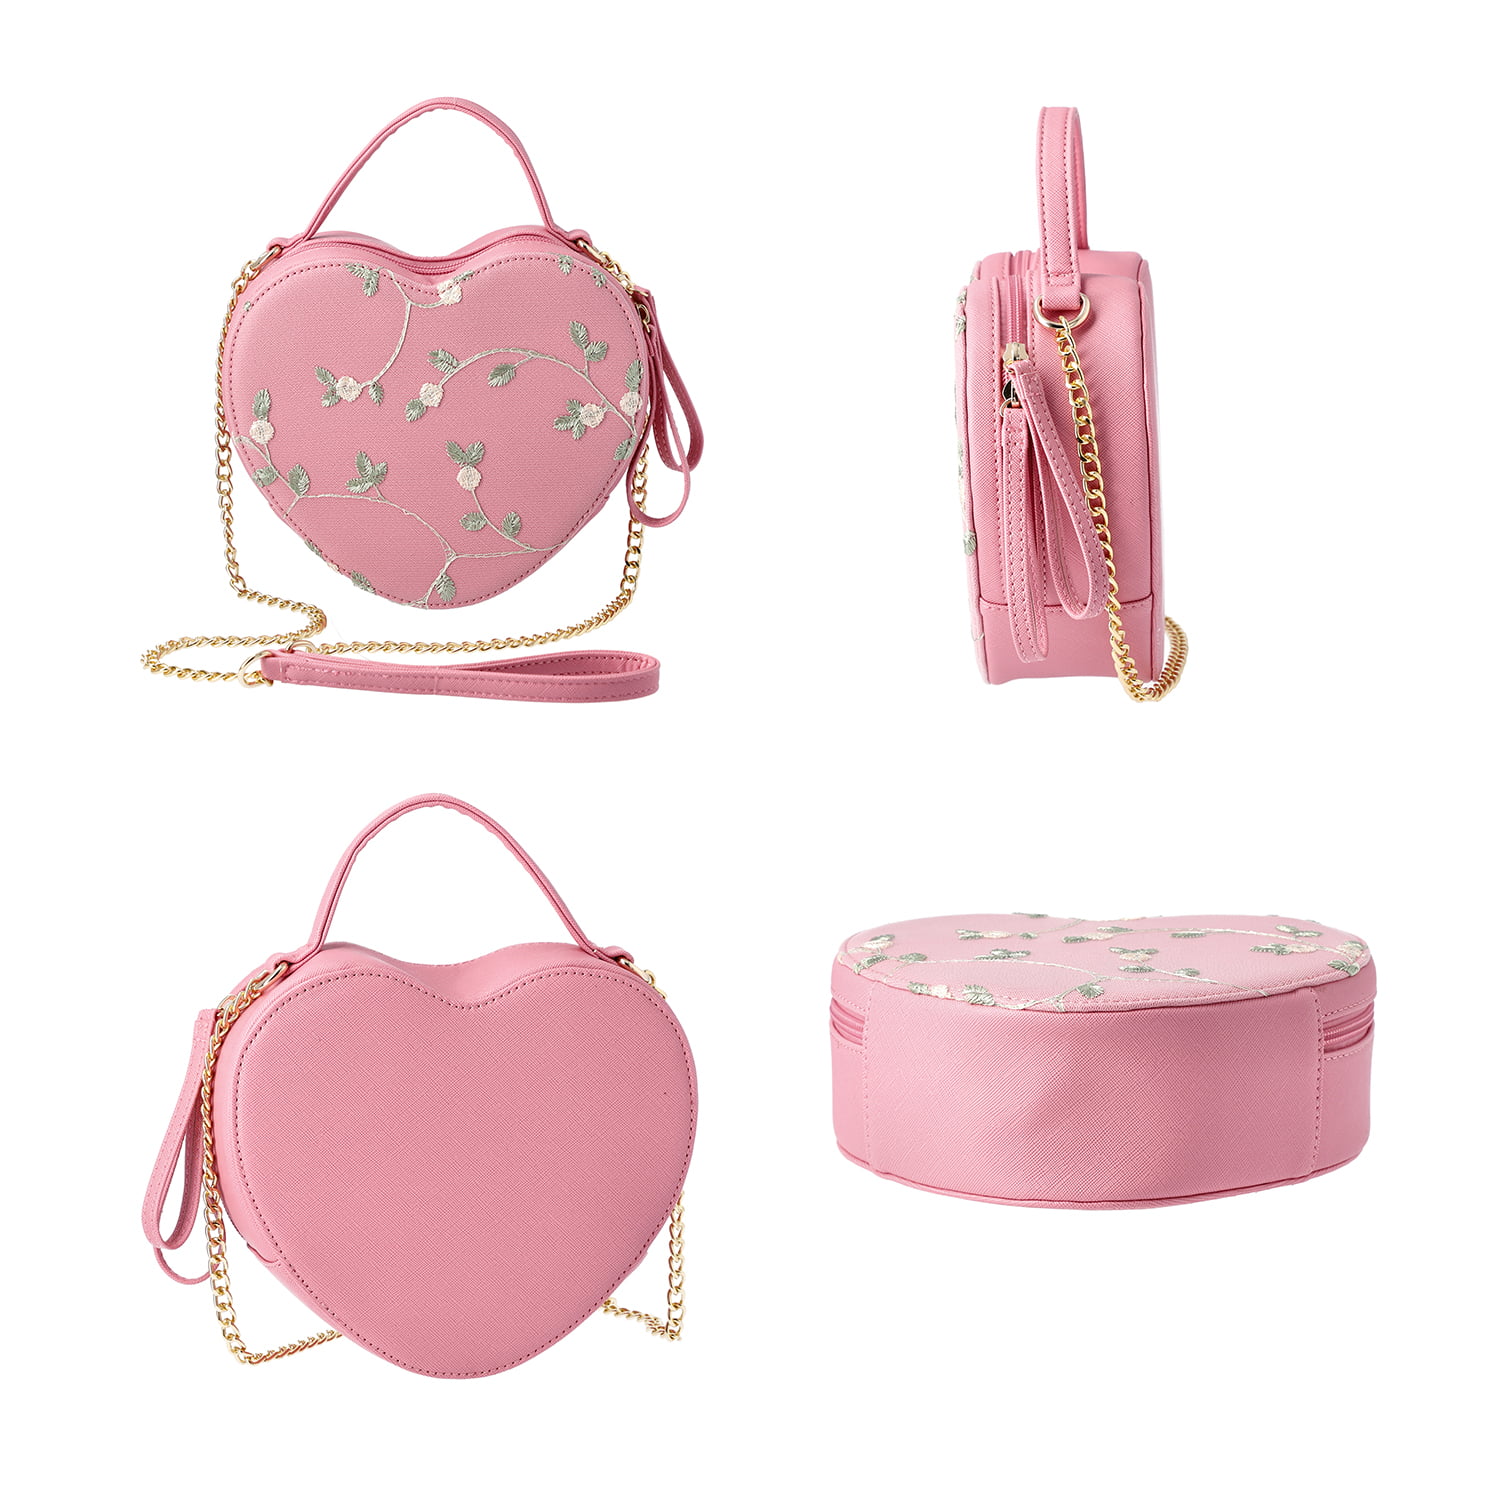 My Daily Women Tote Shoulder Bag Pink Hearts Valentines Day Wedding Handbag 